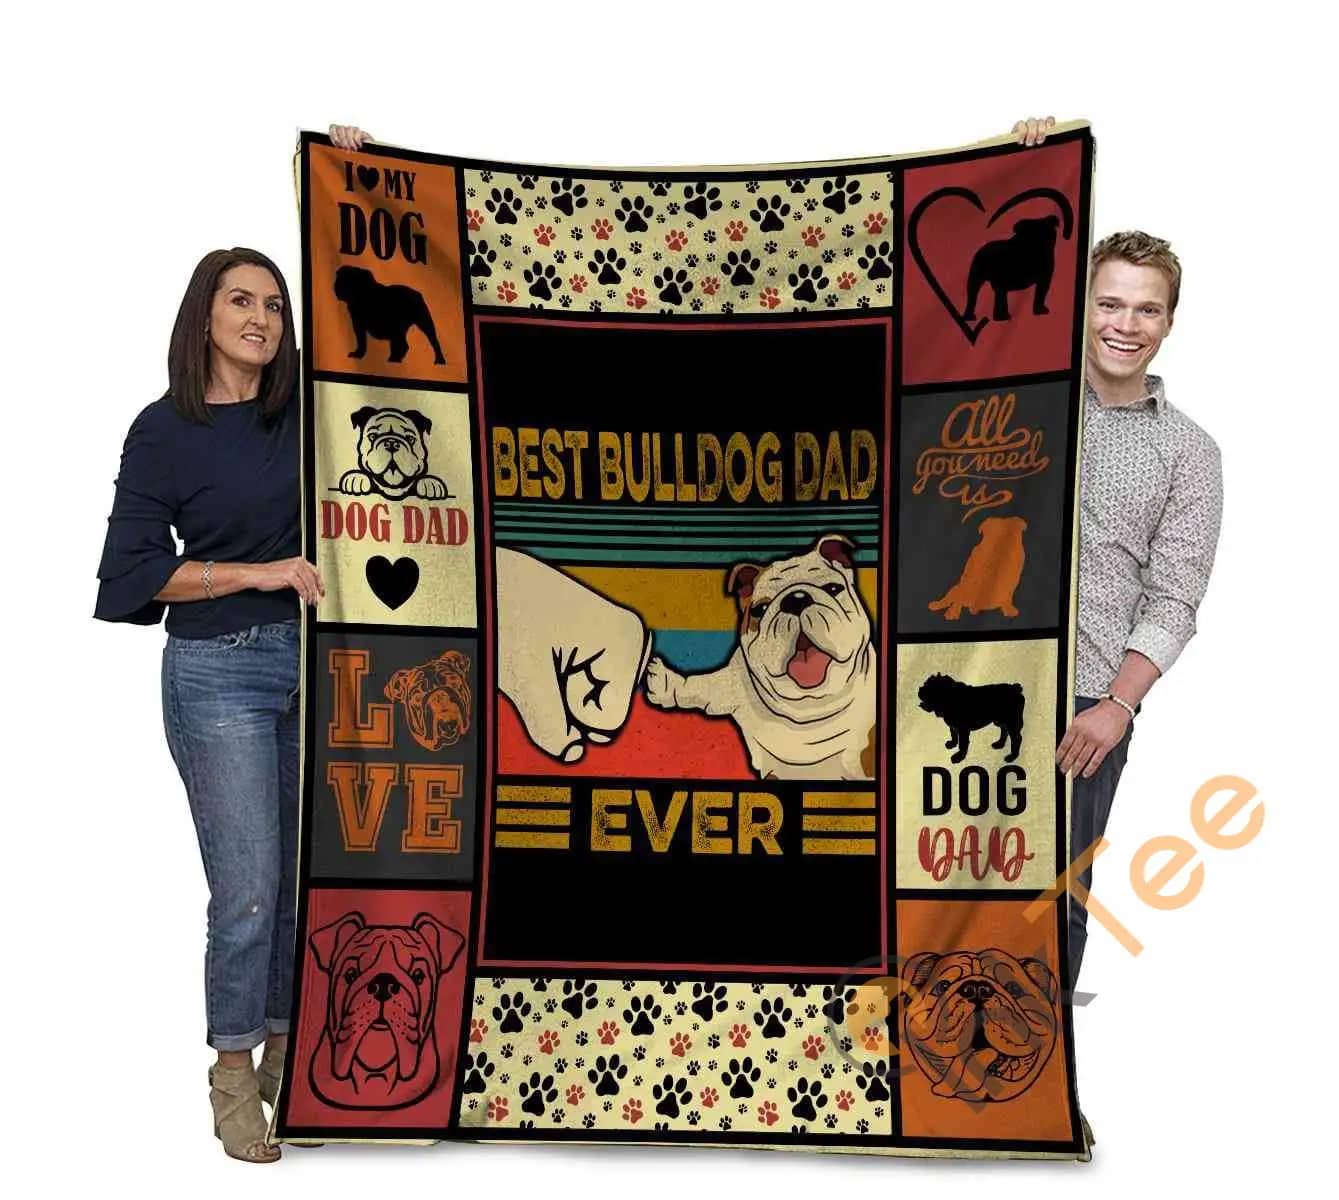 Best Bulldog Dad Ever Bulldog Dog Bump Fit Ultra Soft Cozy Plush Fleece Blanket